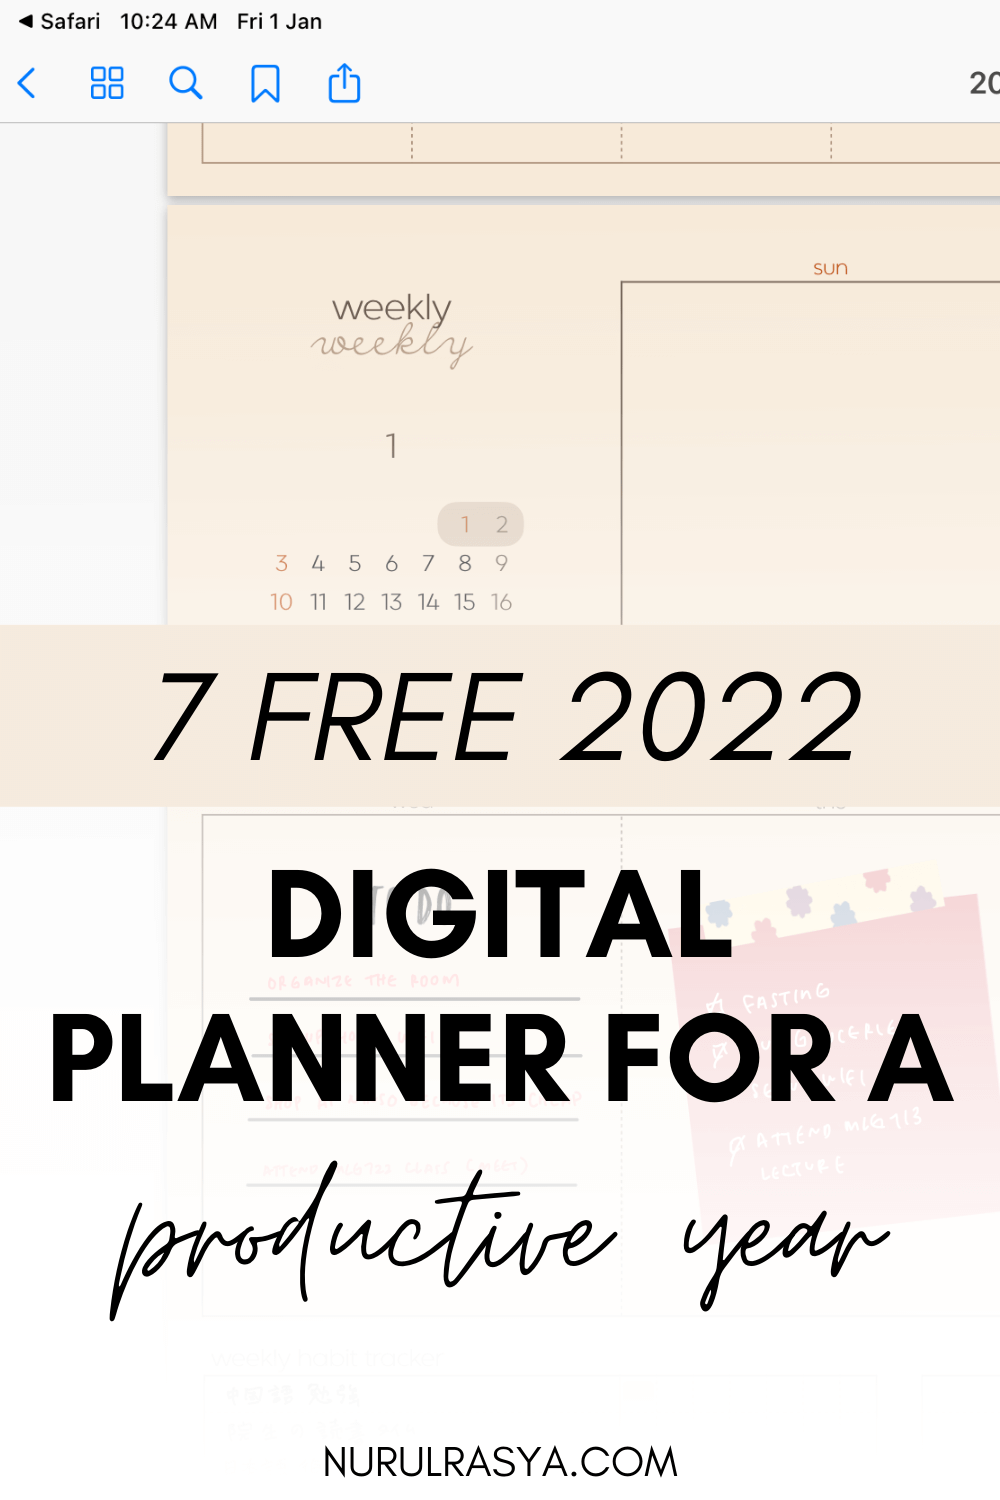 2022 digital planner free download aa allen books pdf free download